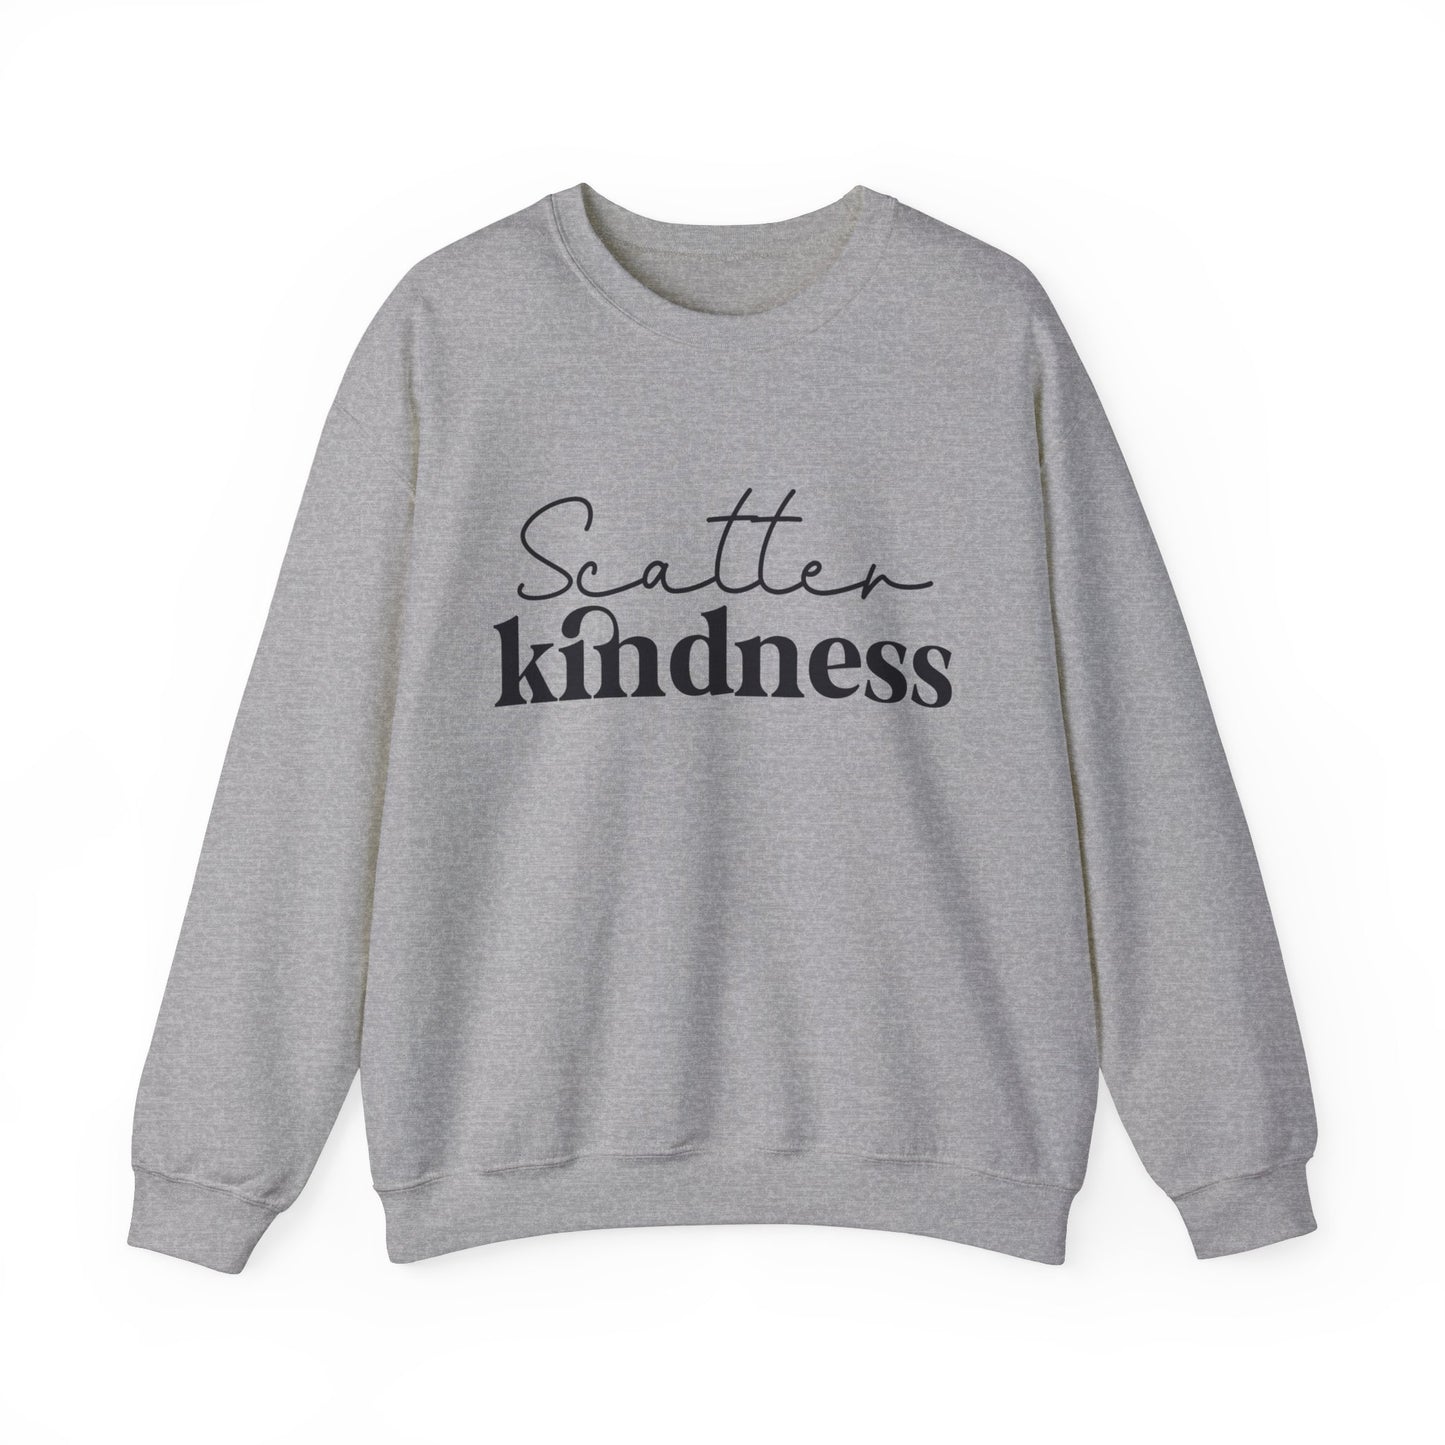 Scatter Kindness Women's Easter Bible Verse Sweatshirt